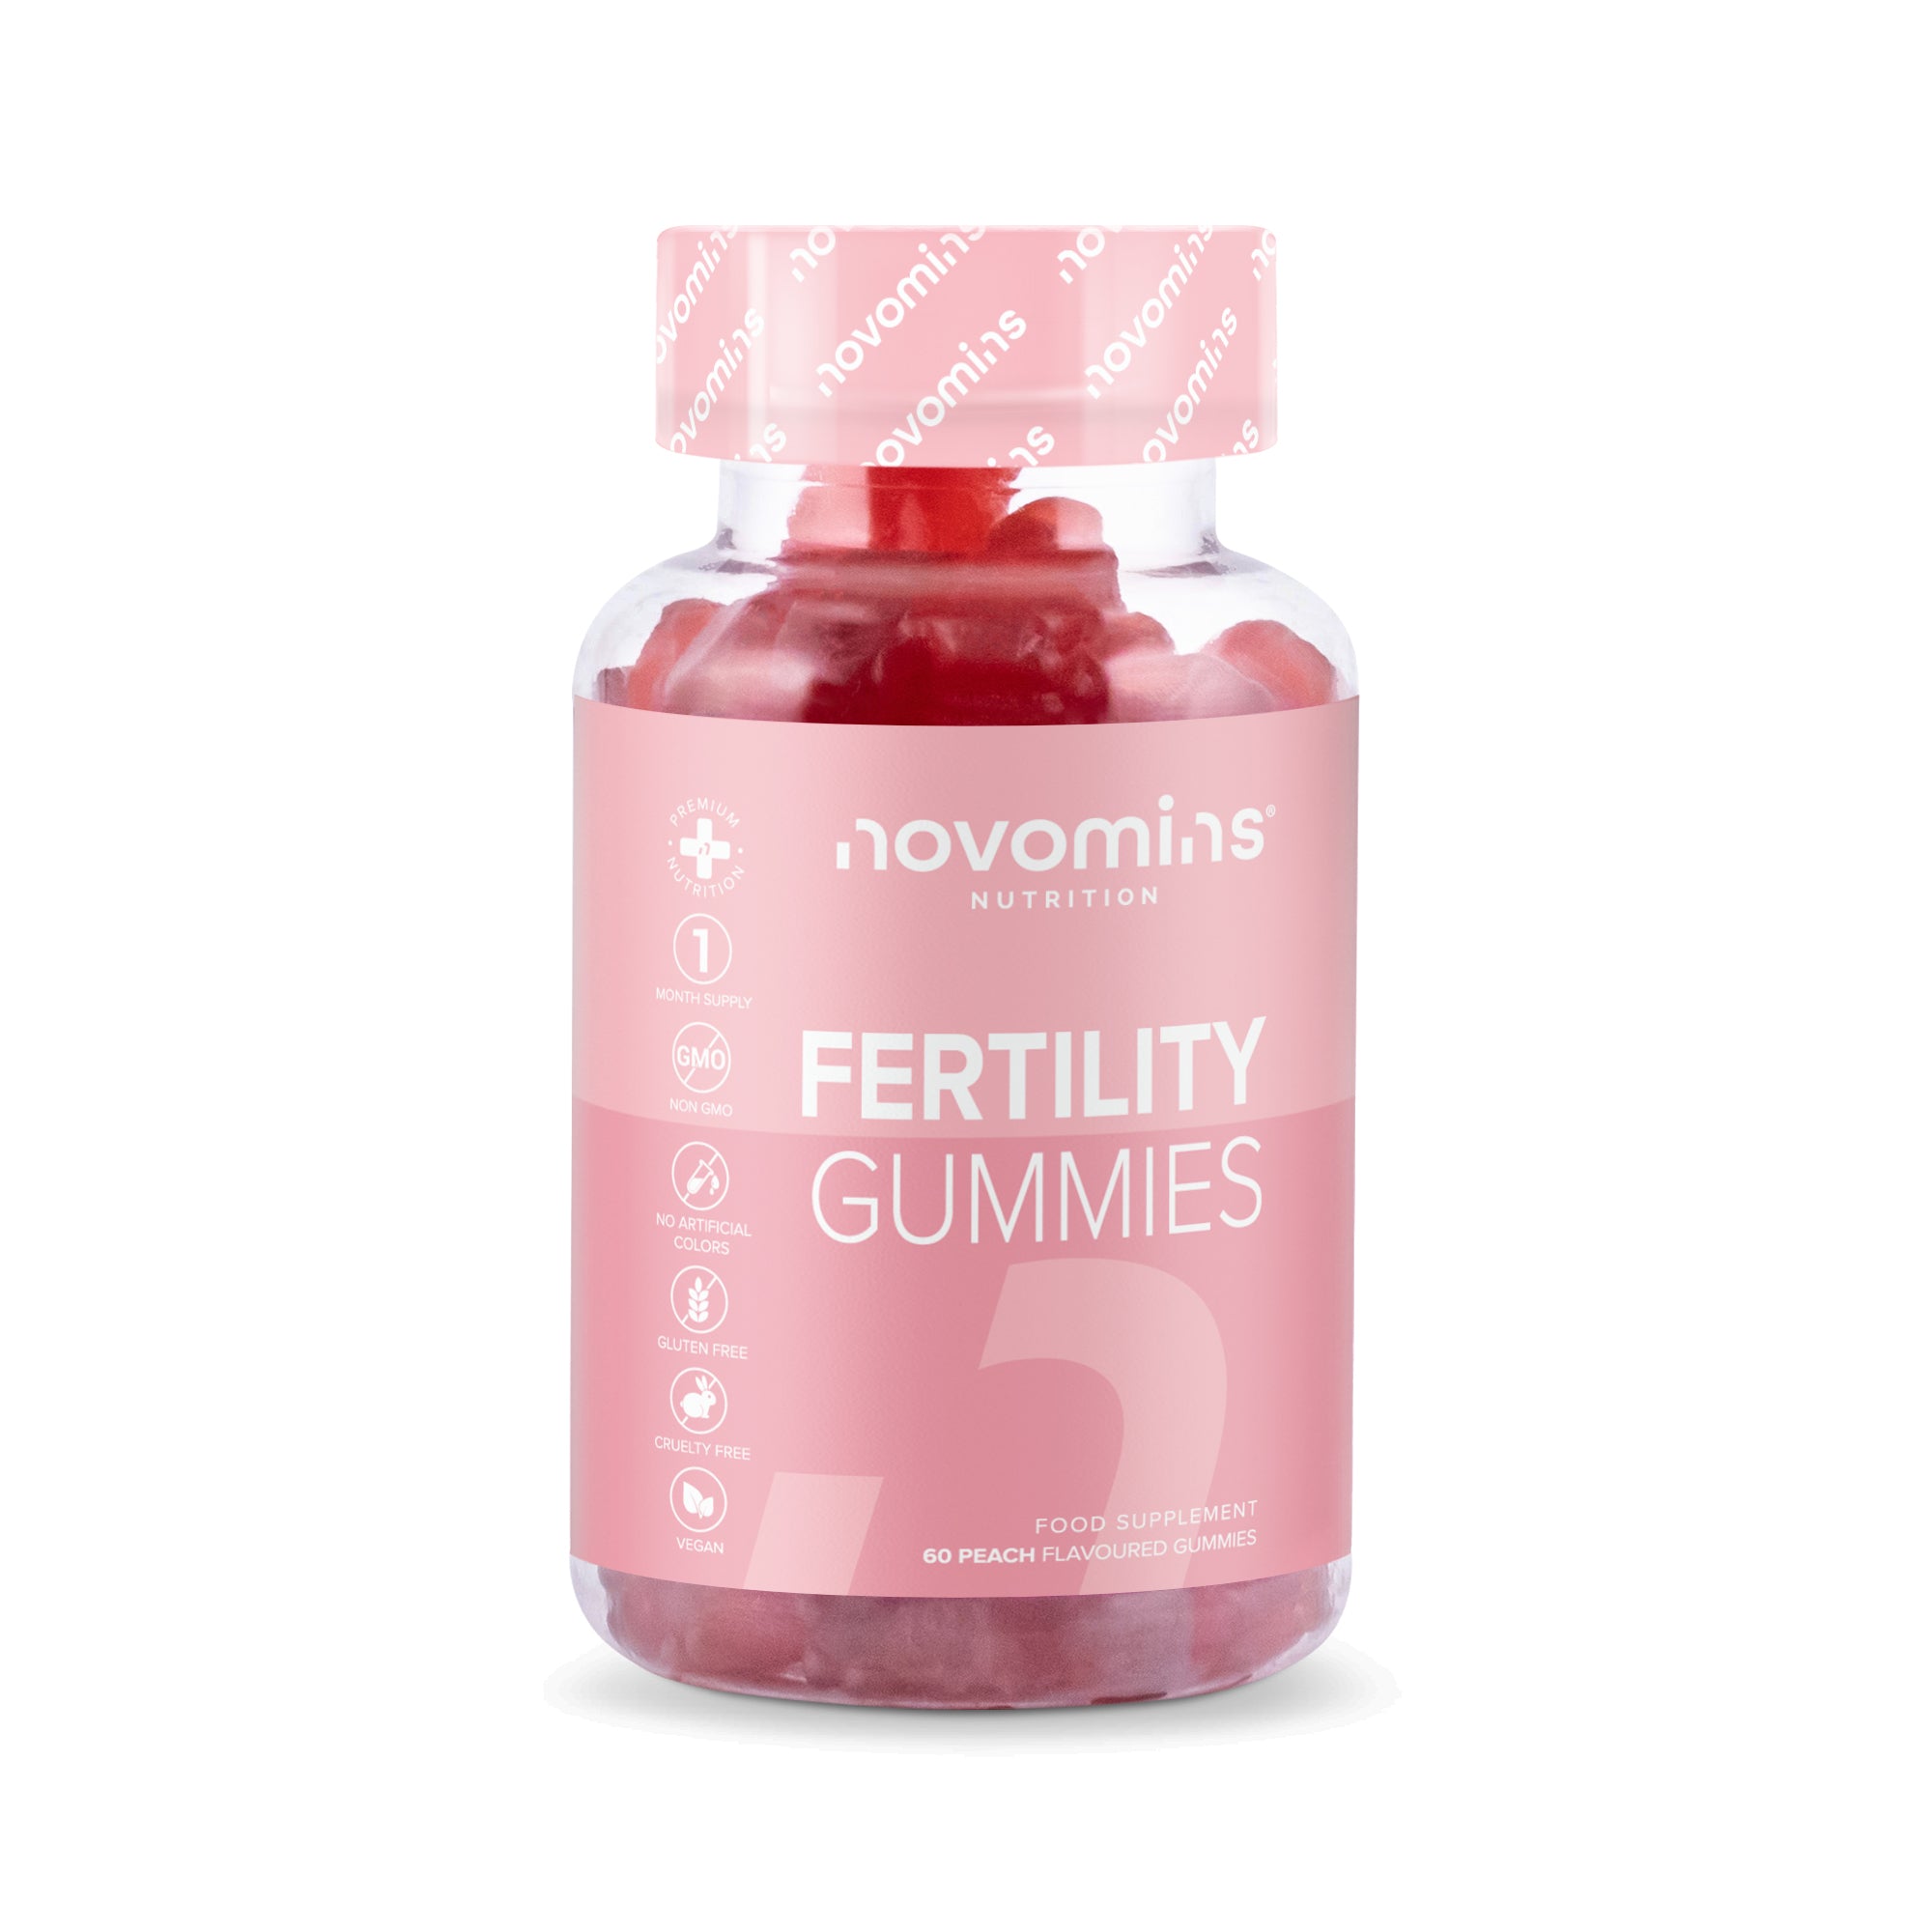 Novomins Fertility Gummies